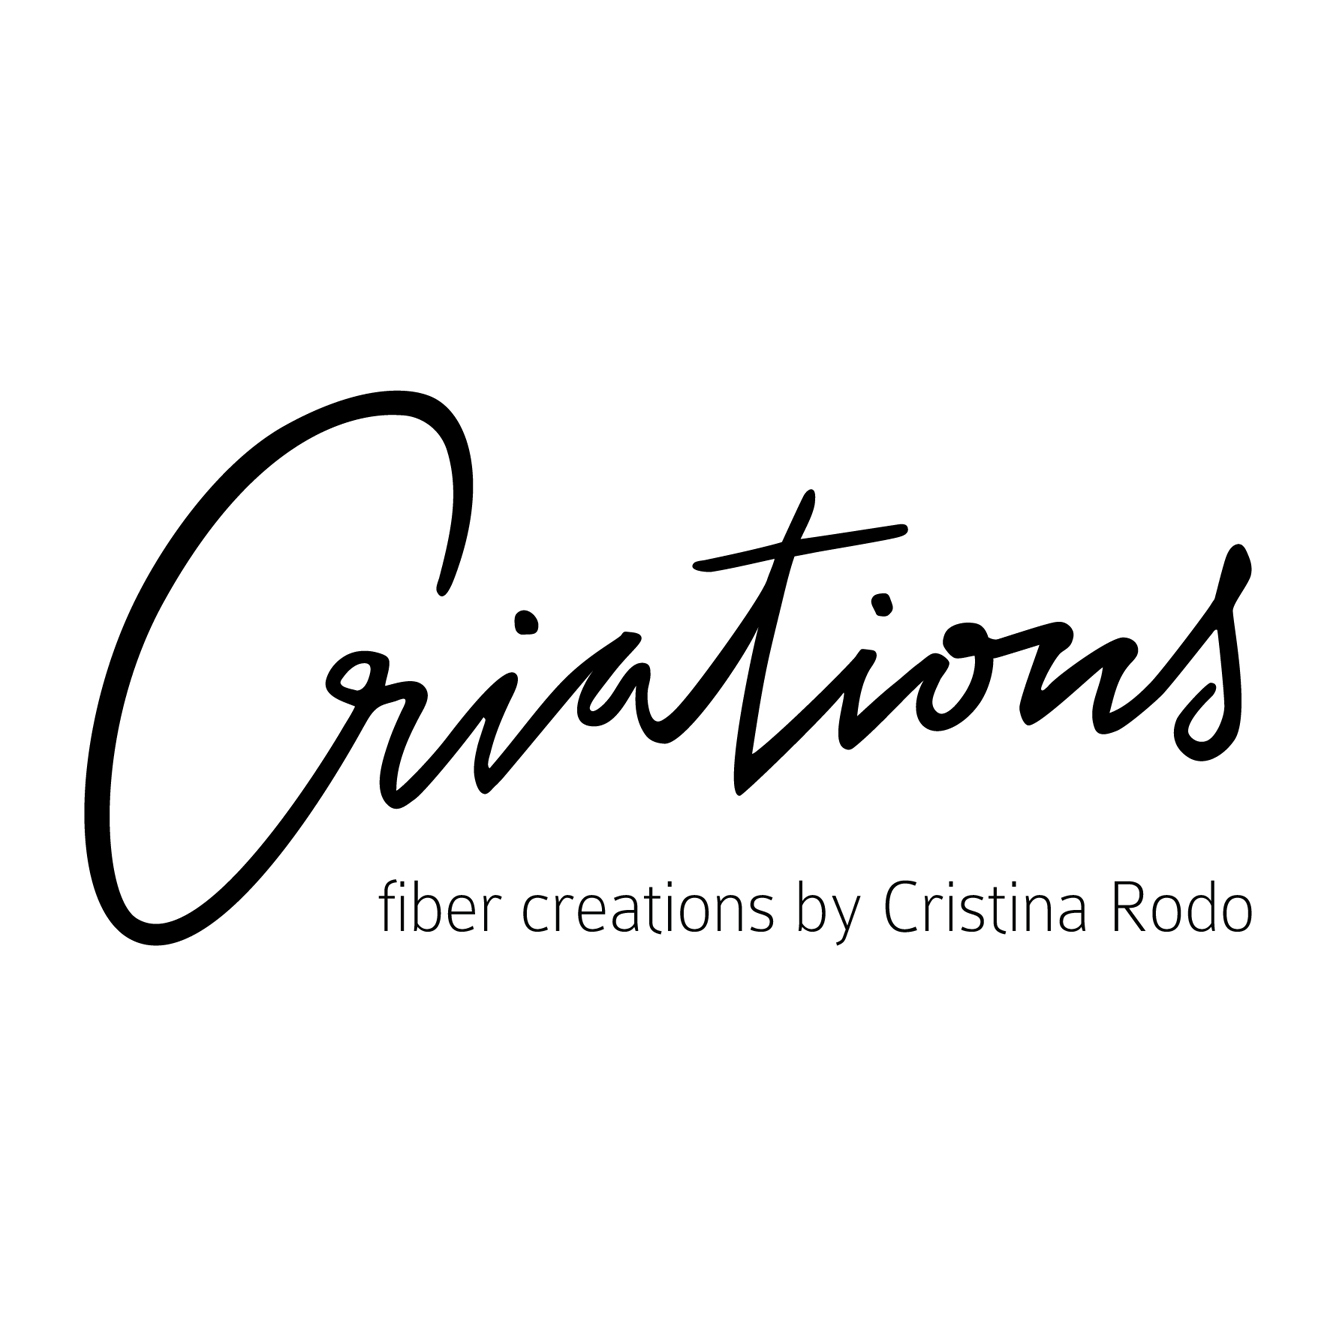 Criations by Cristina Rodo